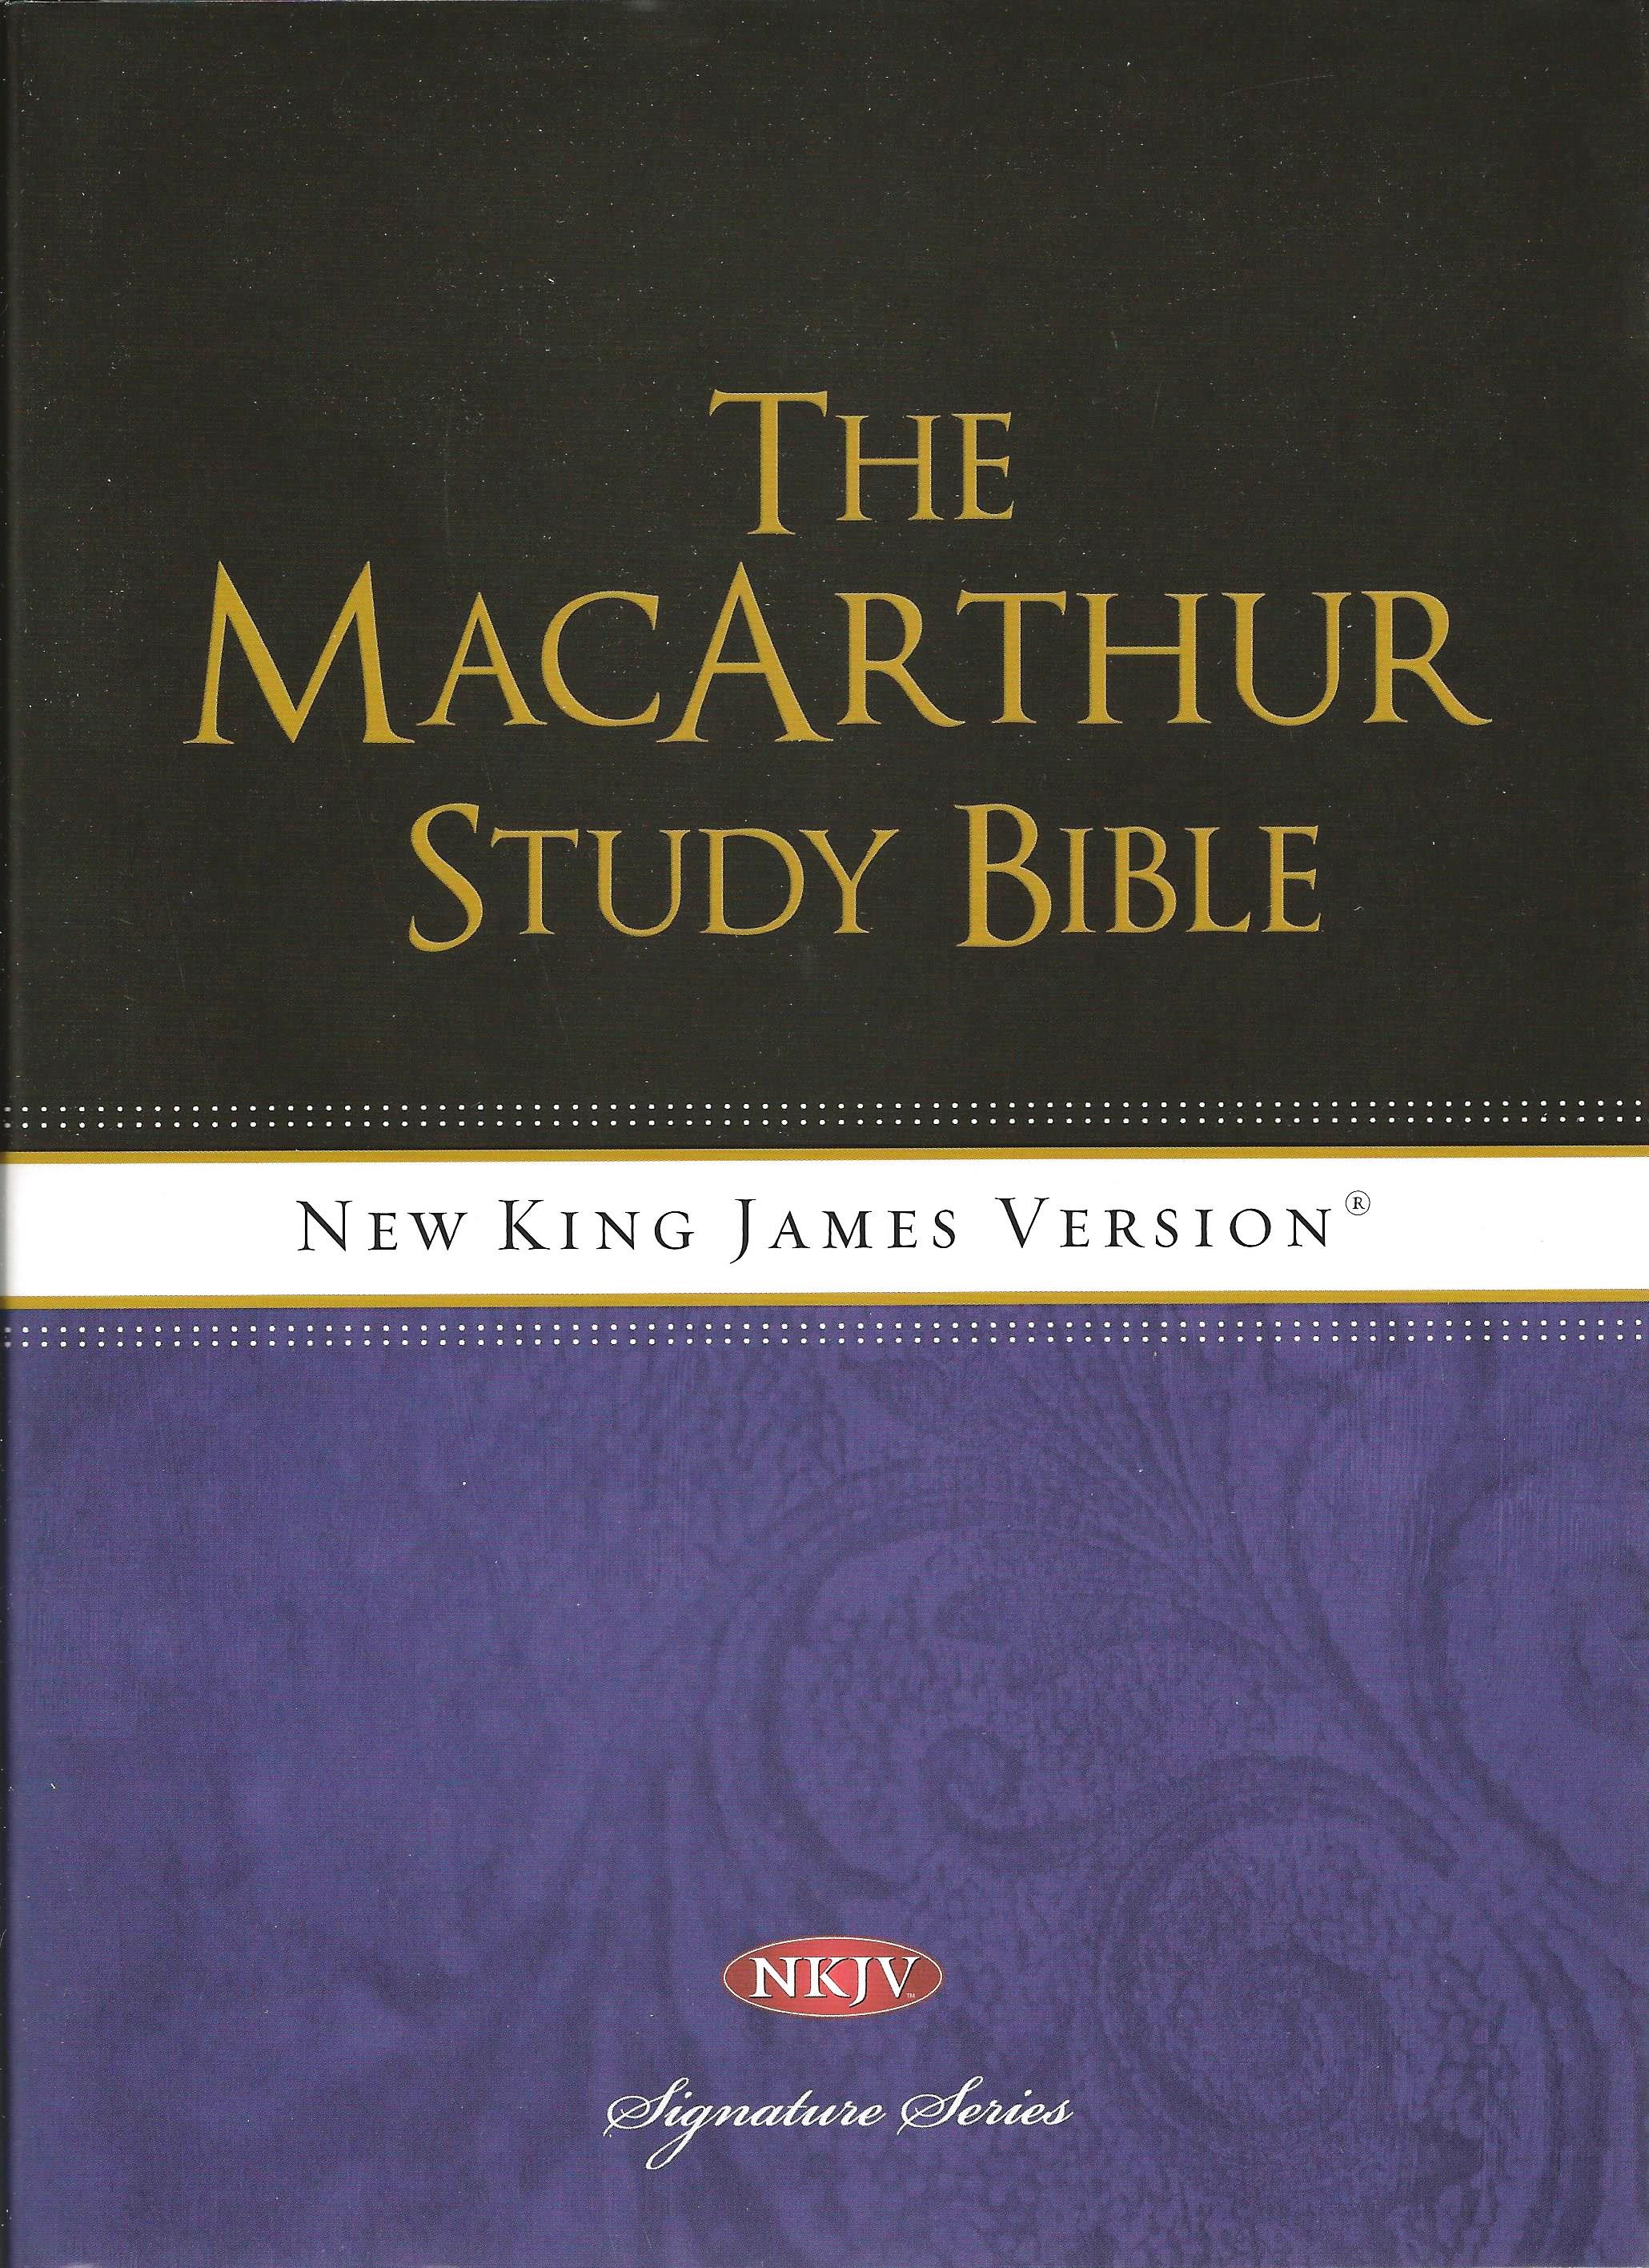 NKJV MACARTHUR STUDY BIBLE Hardcover - Click Image to Close